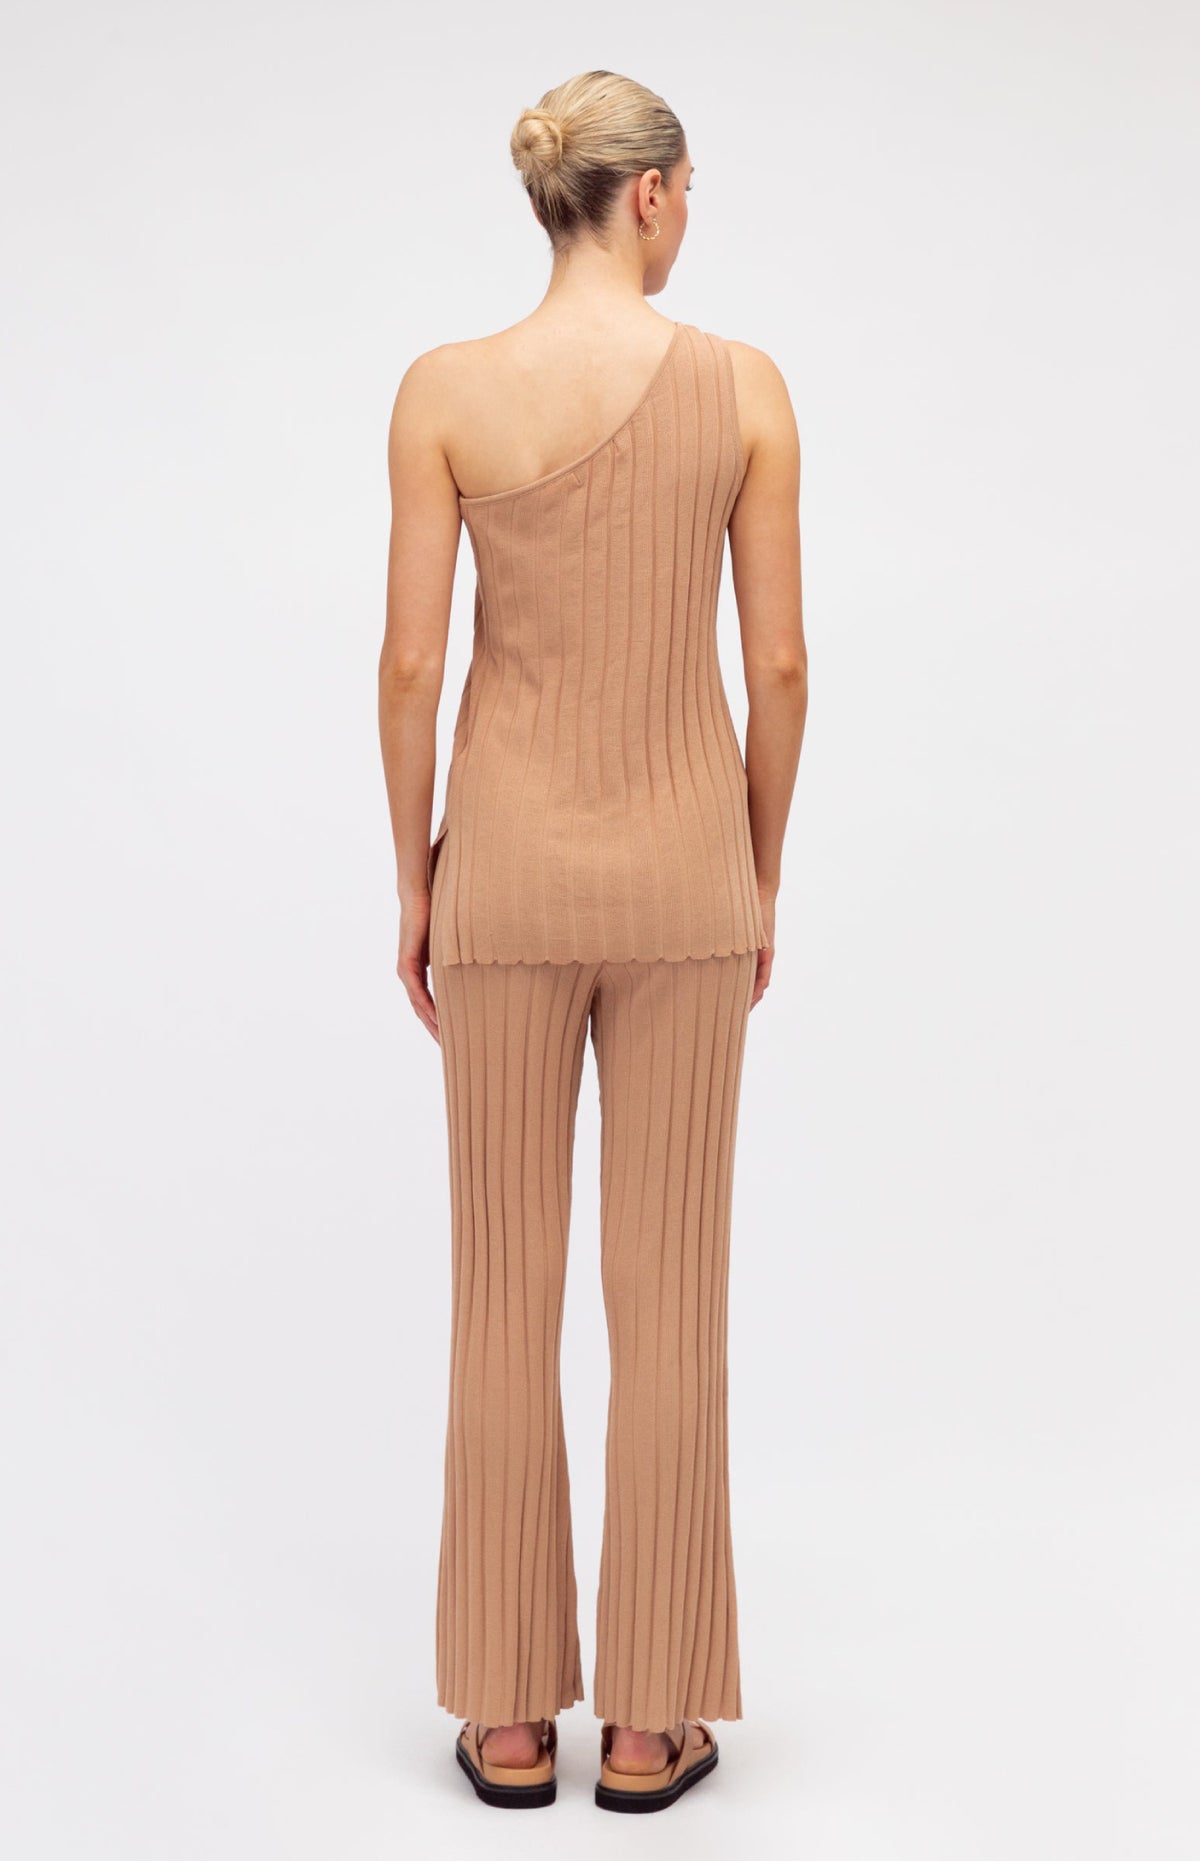 Jordana Off Shoulder Top & High Waisted Pants (Knit Set) - Nude